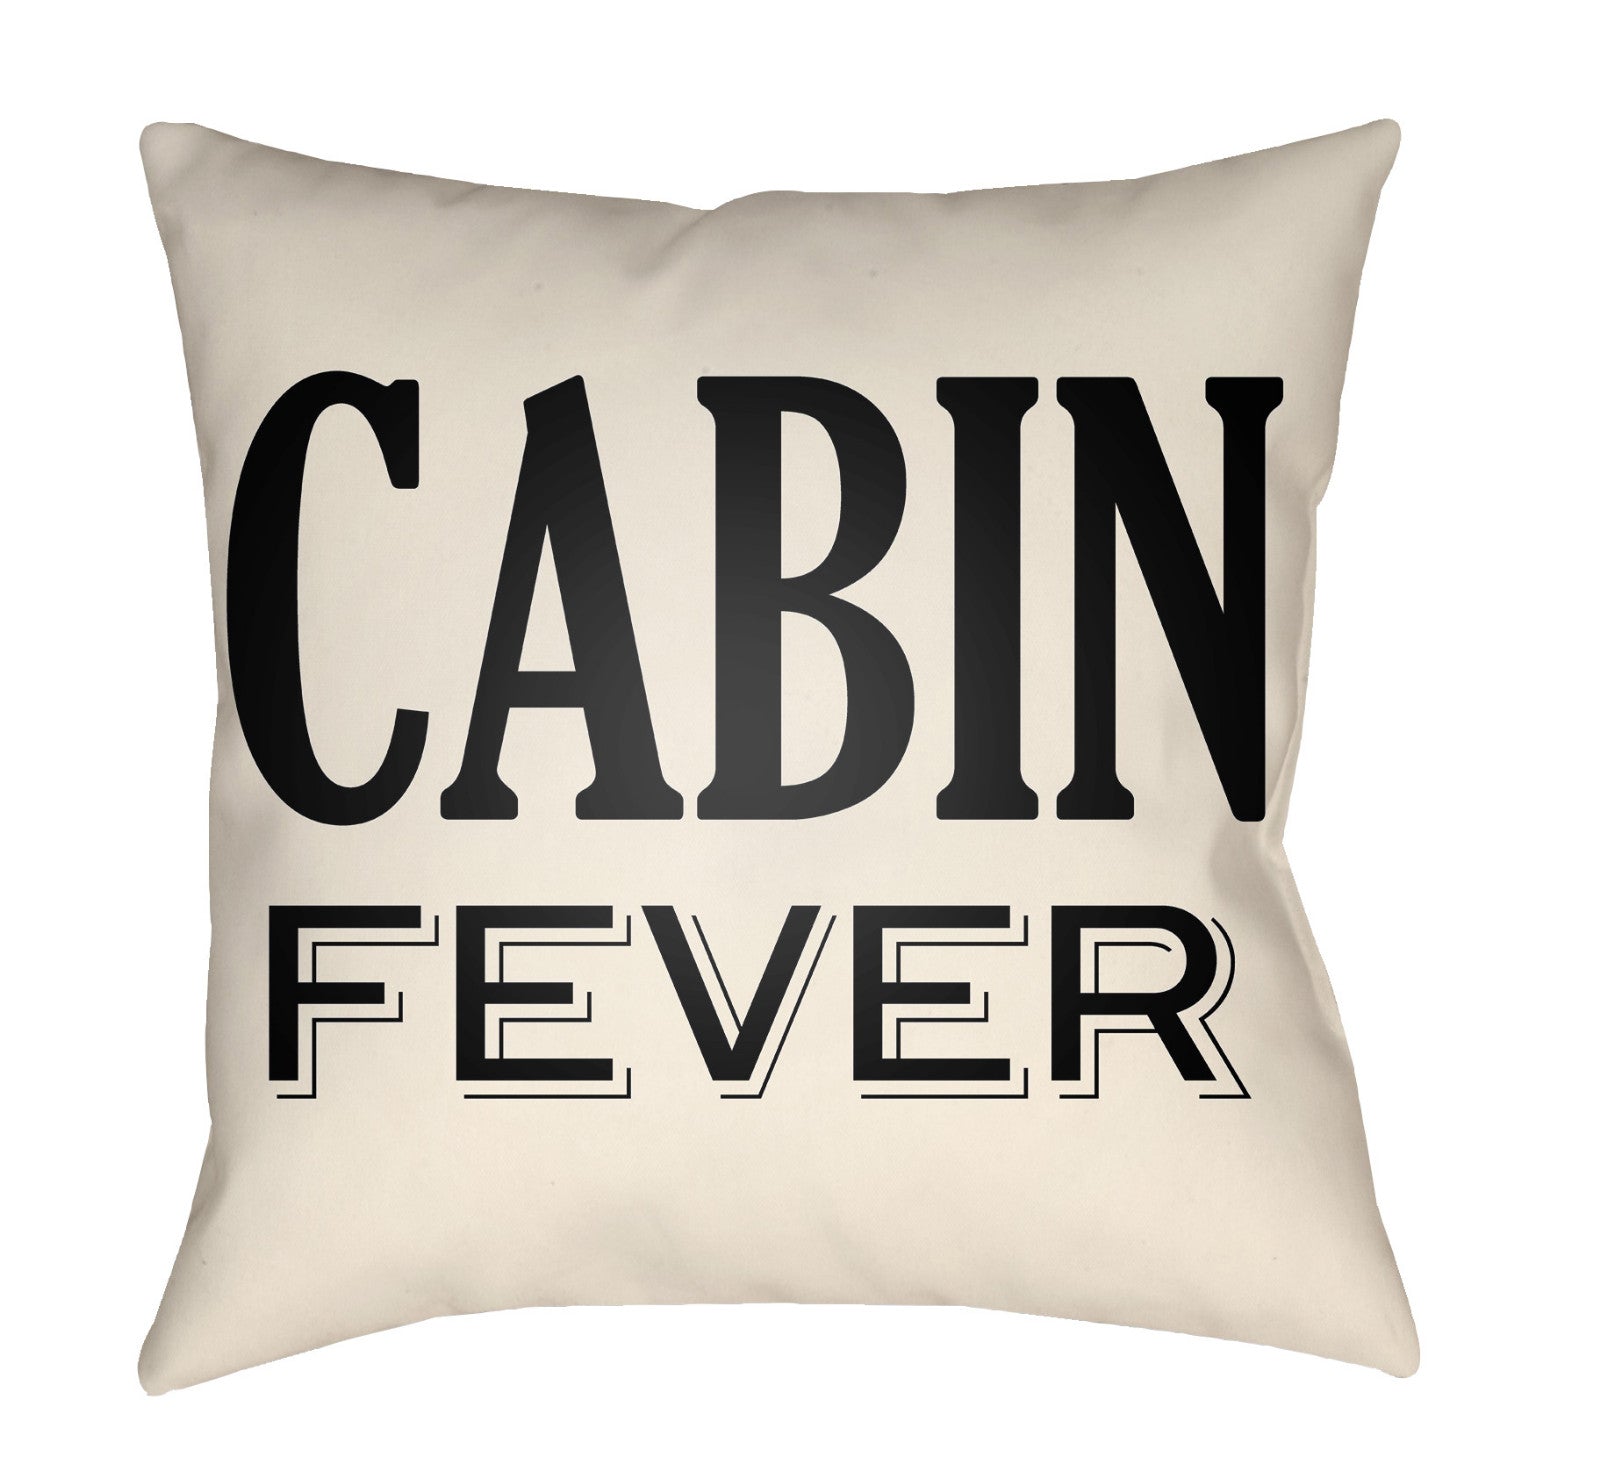 Artistic Weavers Lodge Cabin Fever Onyx Black/Beige main image